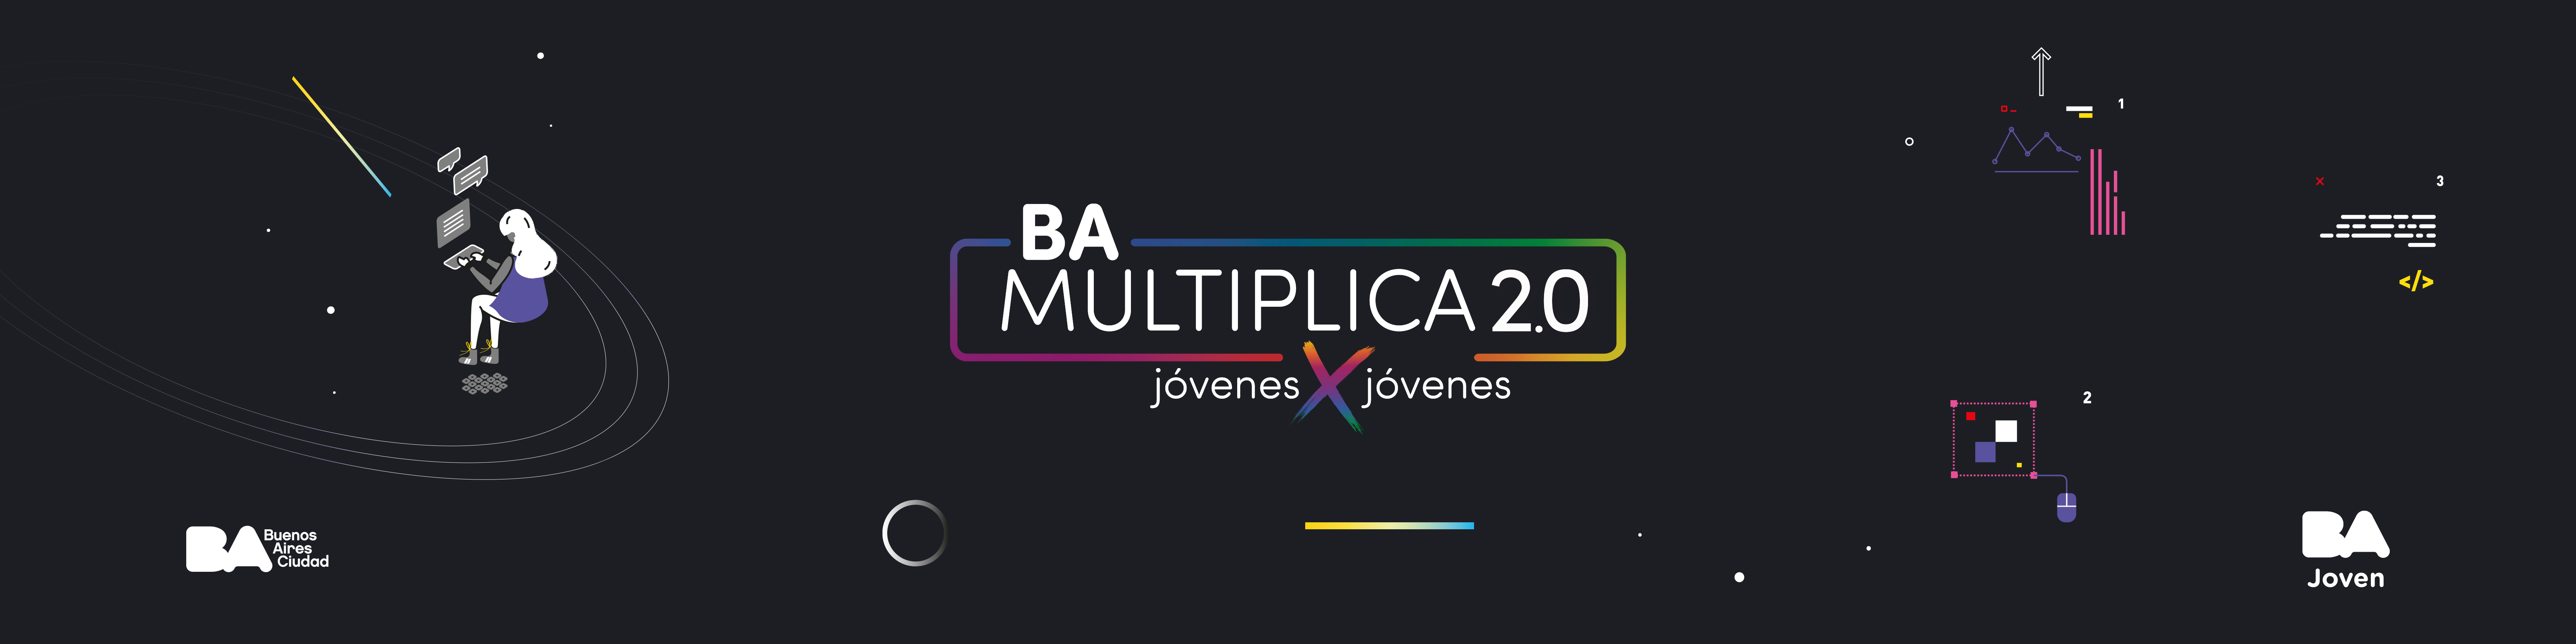 Banner de BA Multiplica 2.0